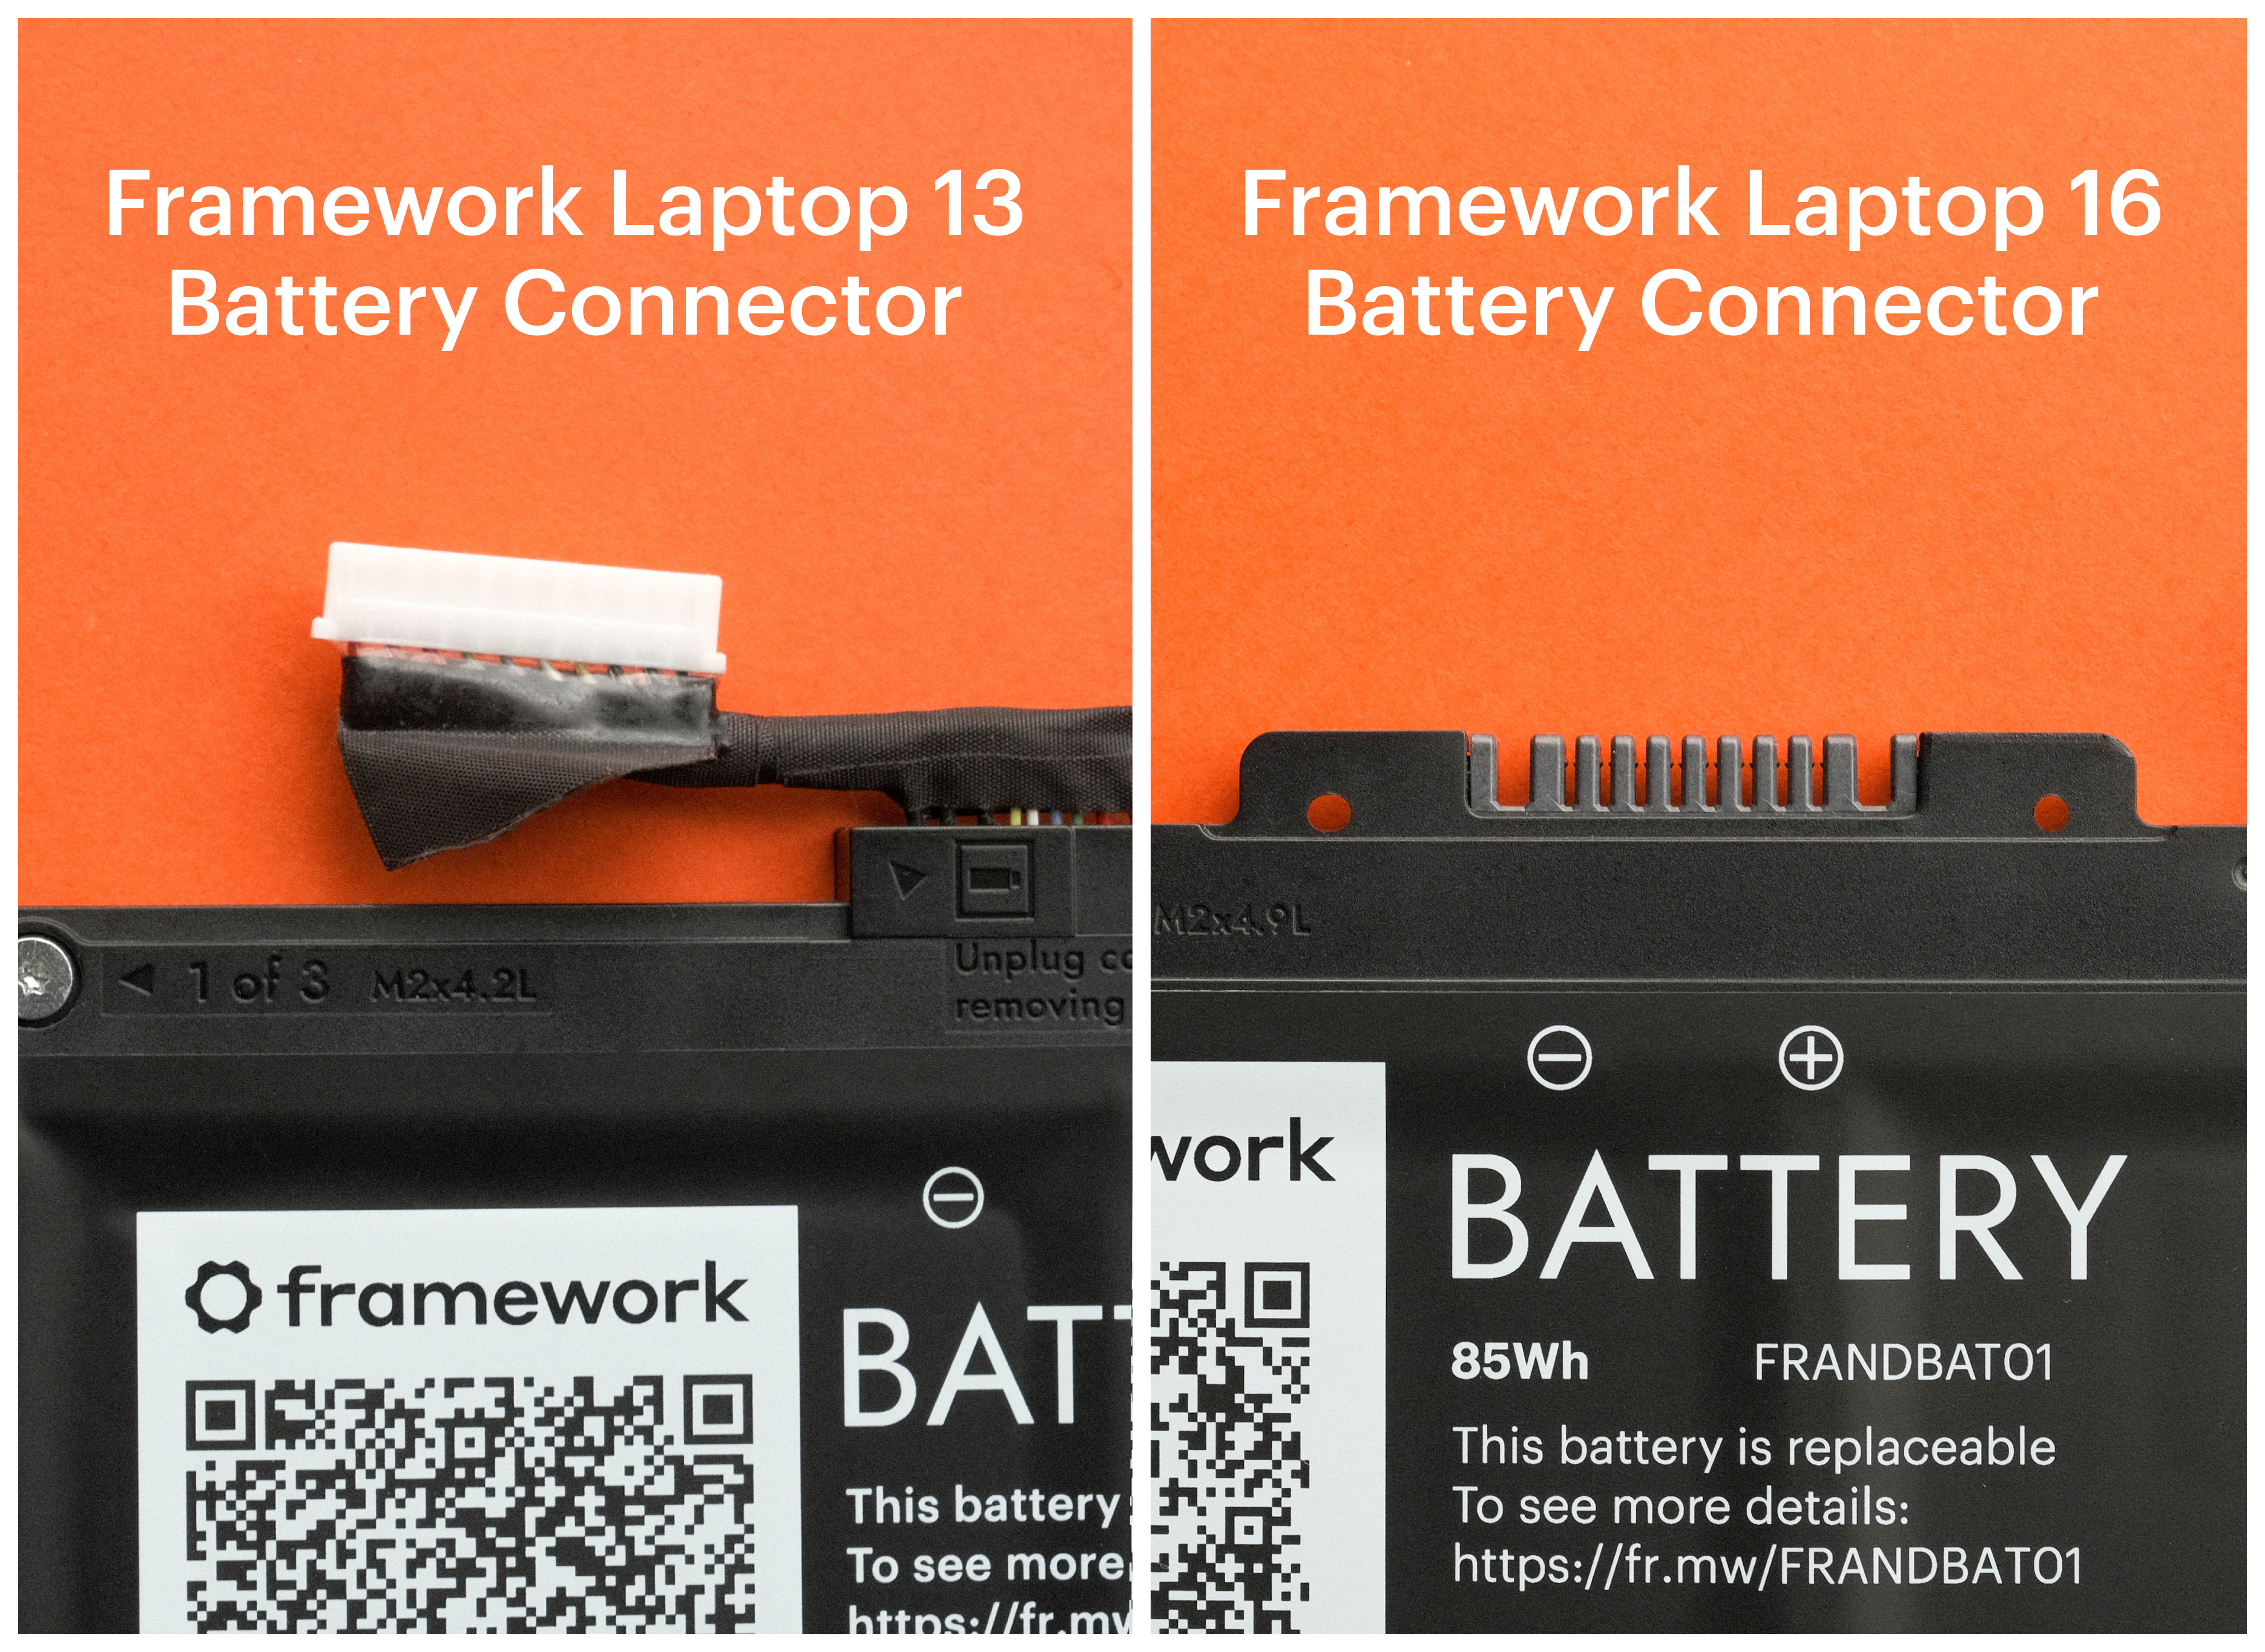 Framework Laptop 13 vs Framework Laptop 16 Battery Connector